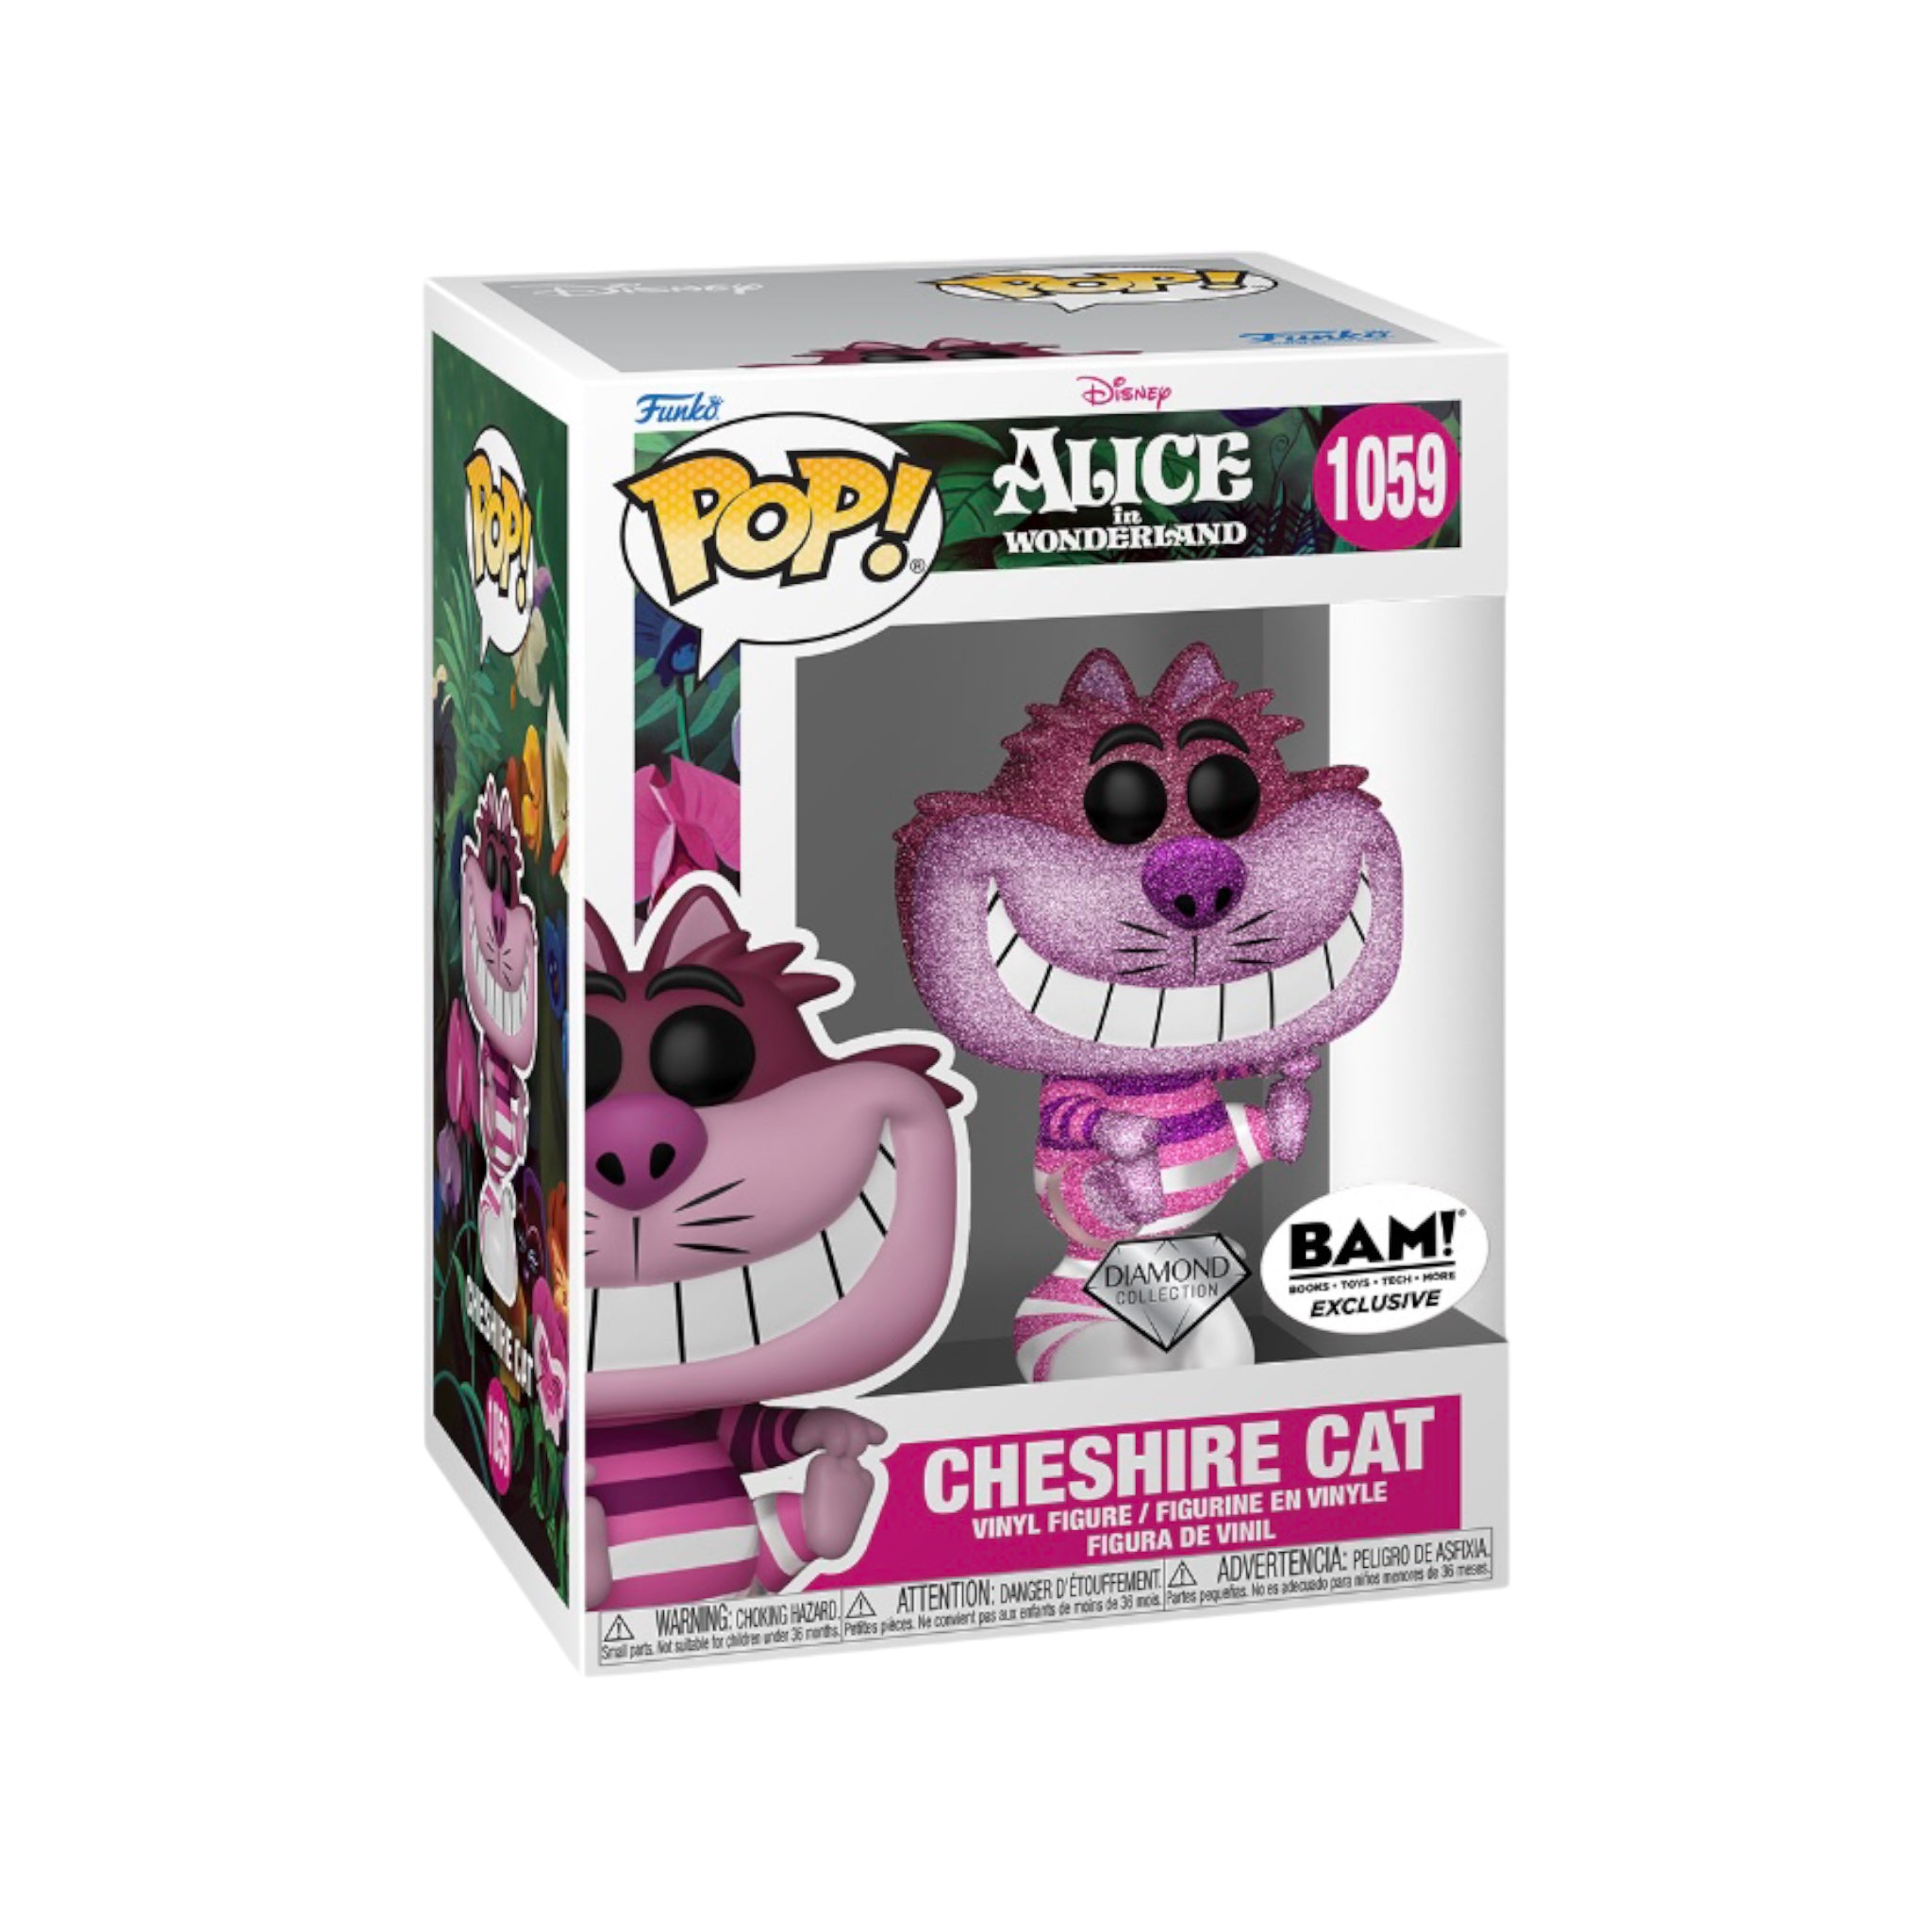 Cheshire Cat #1059 (Diamond Collection) Funko Pop! - Alice in Wonderland - BAM! Exclusive